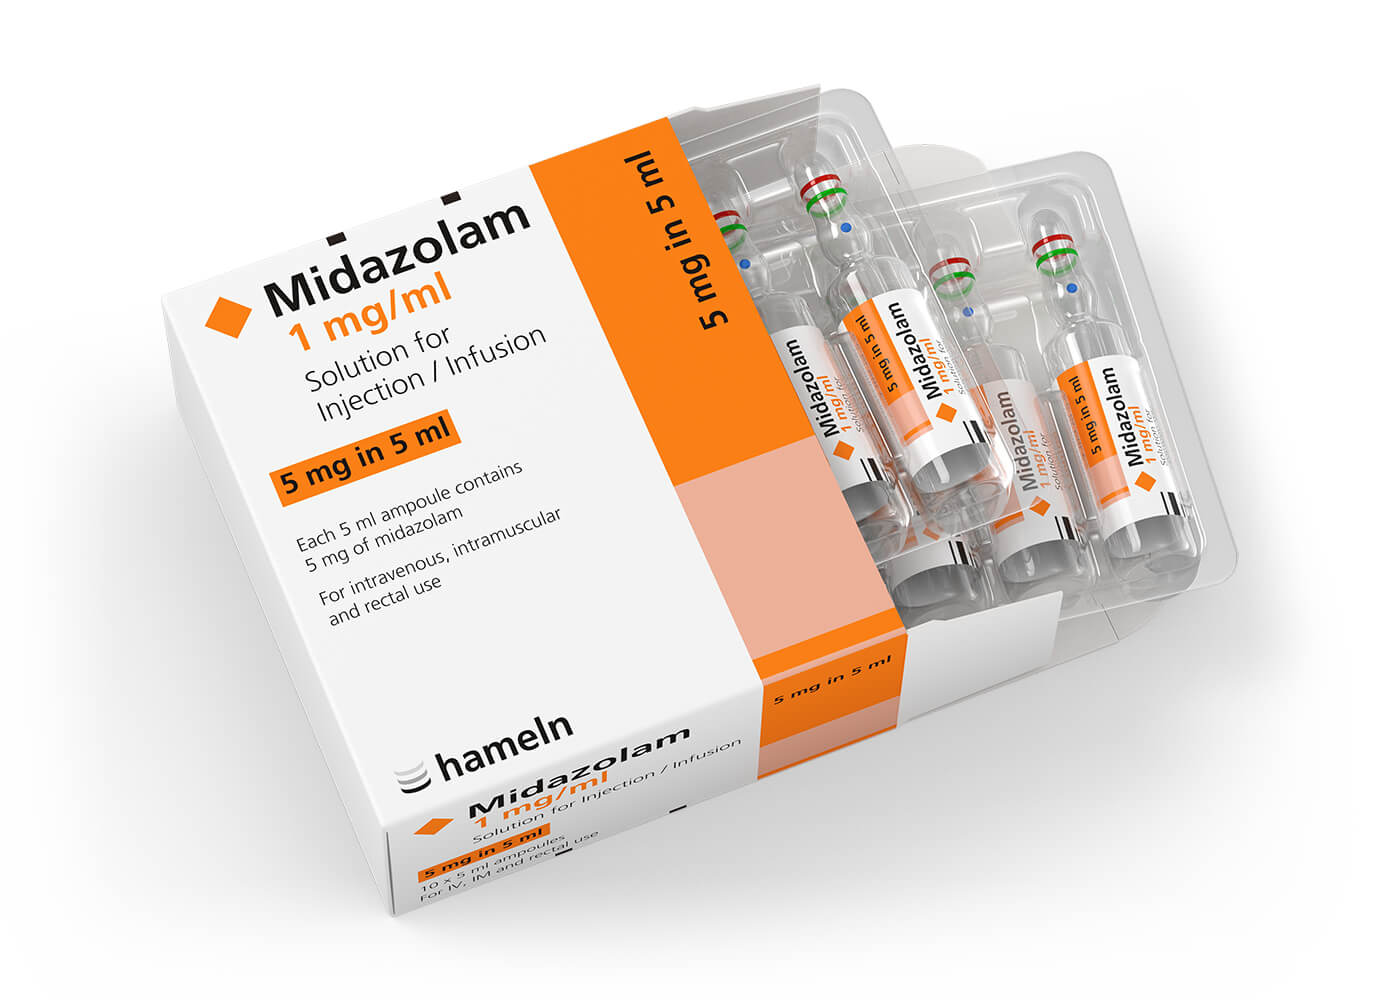 Midazolam_UK_1_mg-ml_in_5_ml_Pack-Amp_10St_2020-20